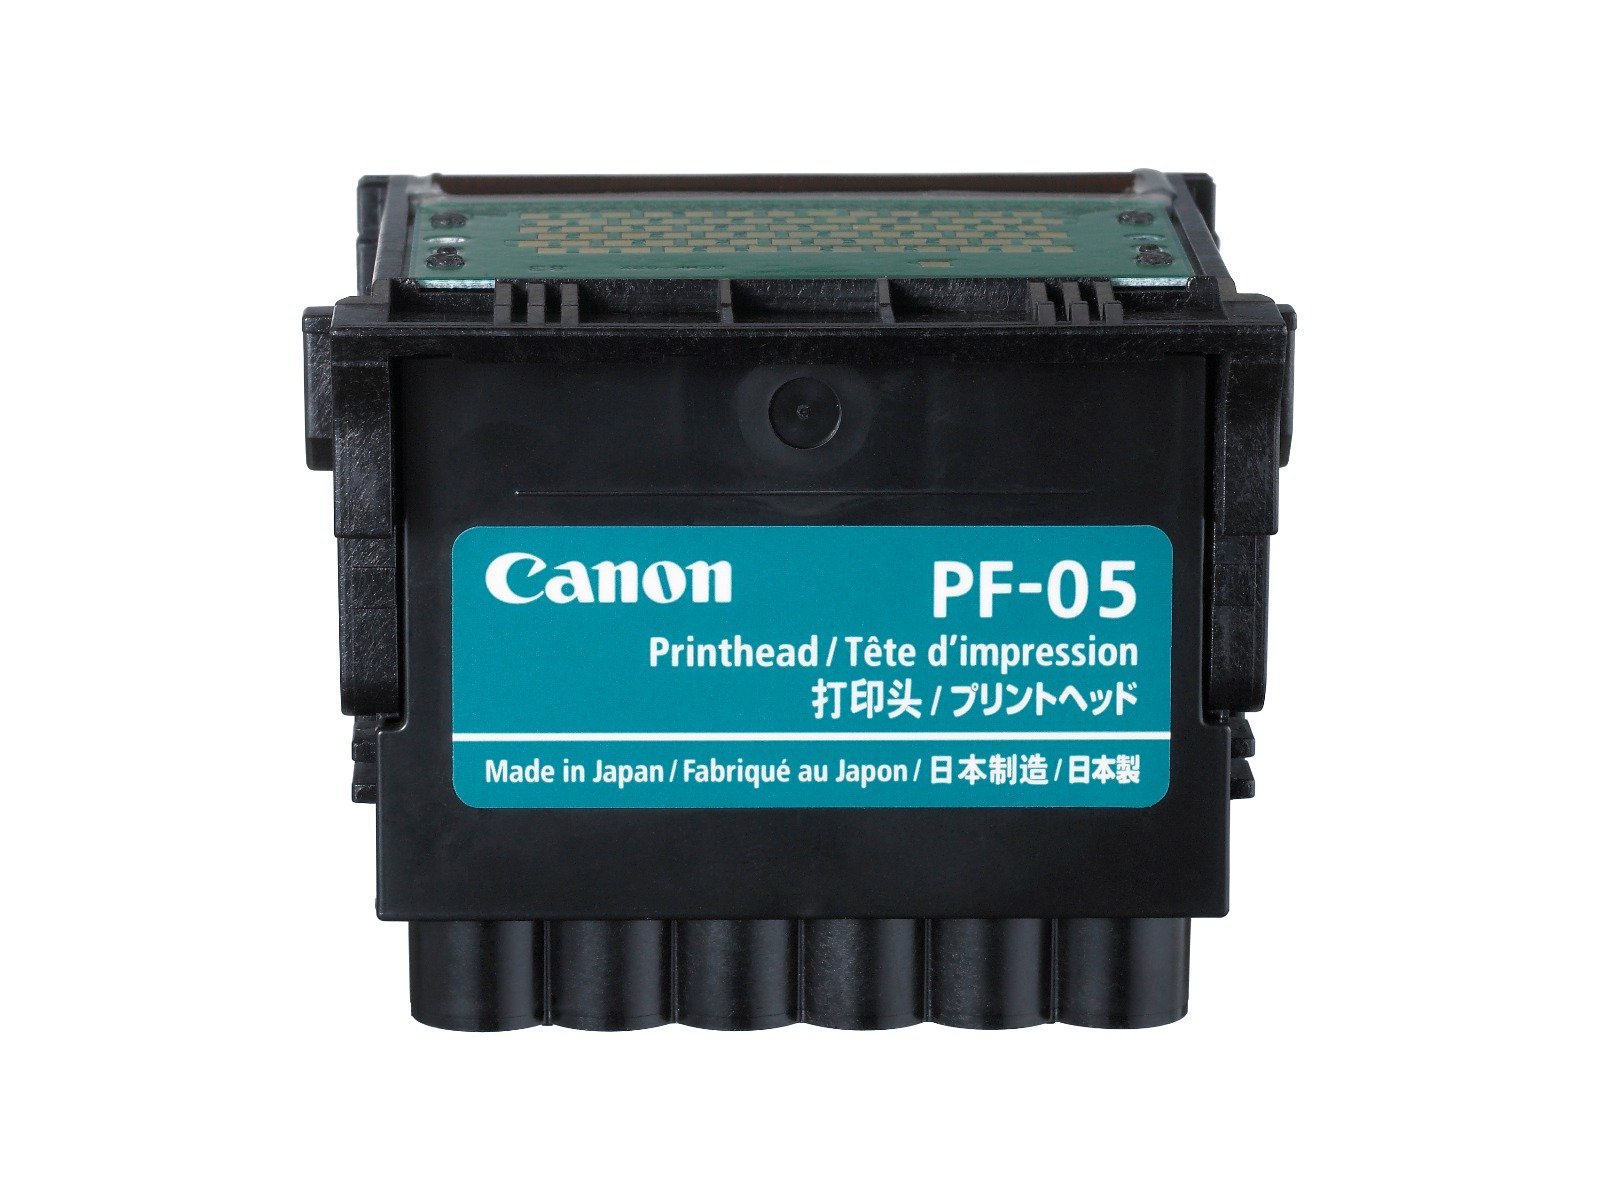 Печатающая головка Canon PF-05 печатающая головка print head 70 matte black